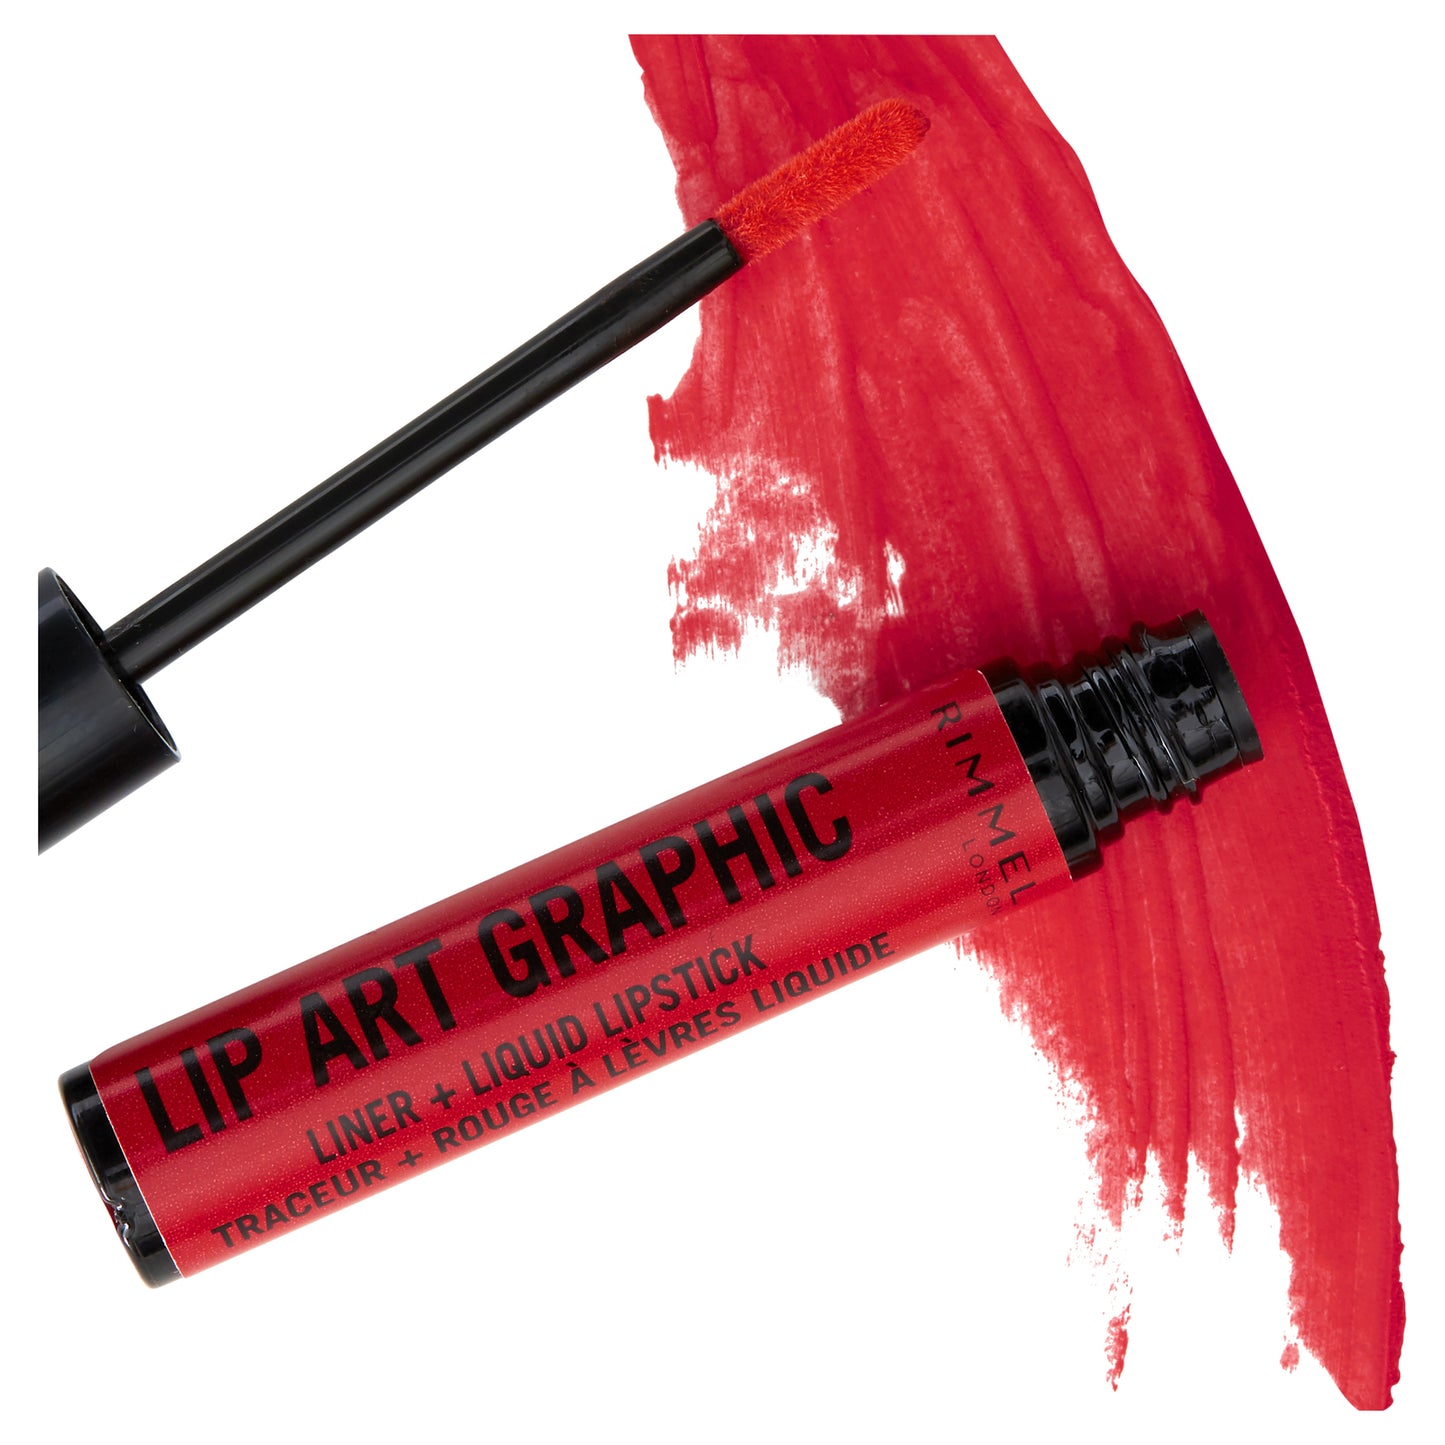 3 x Rimmel London Lip Art Graphic 2 in 1 Liner and Liquid Lipstick 1.8mL - 610 Hot Spot